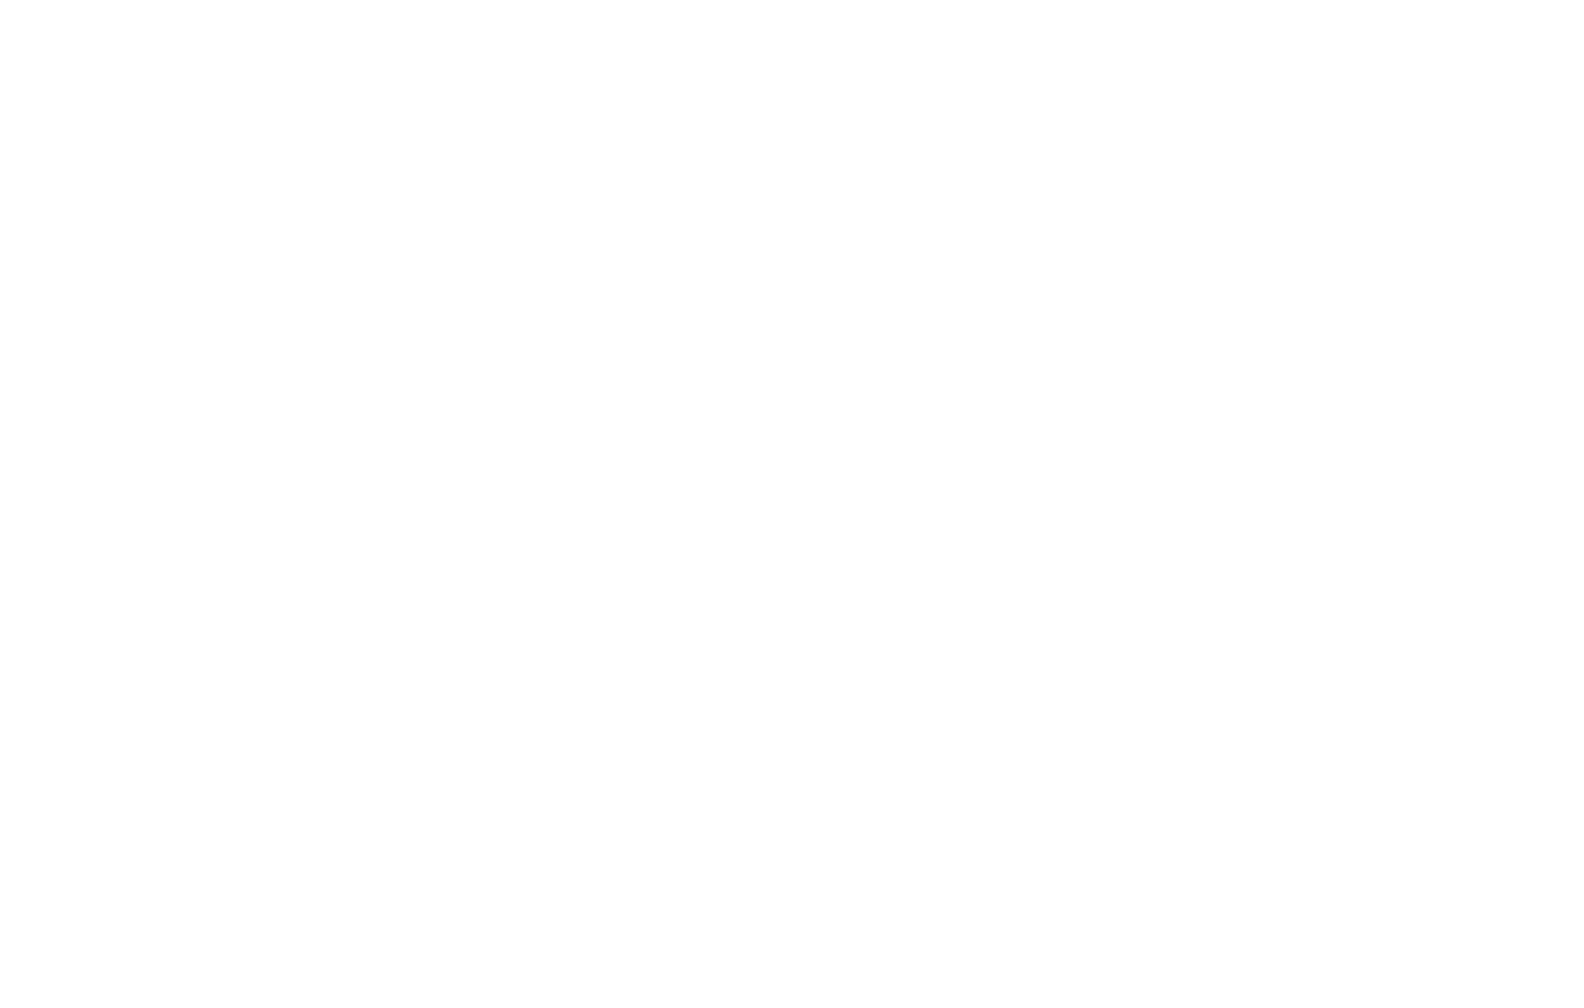 Zerr Berg Architects